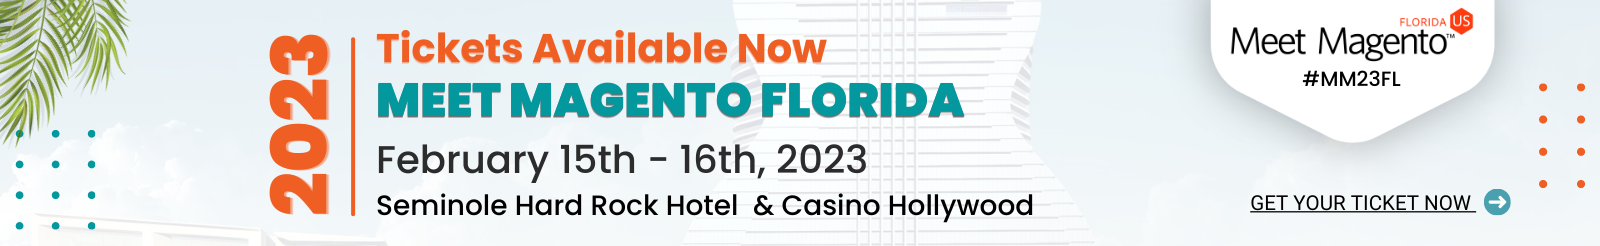 Meet Magento Florida  February 15th - 16th, 2023 - #MM23FL